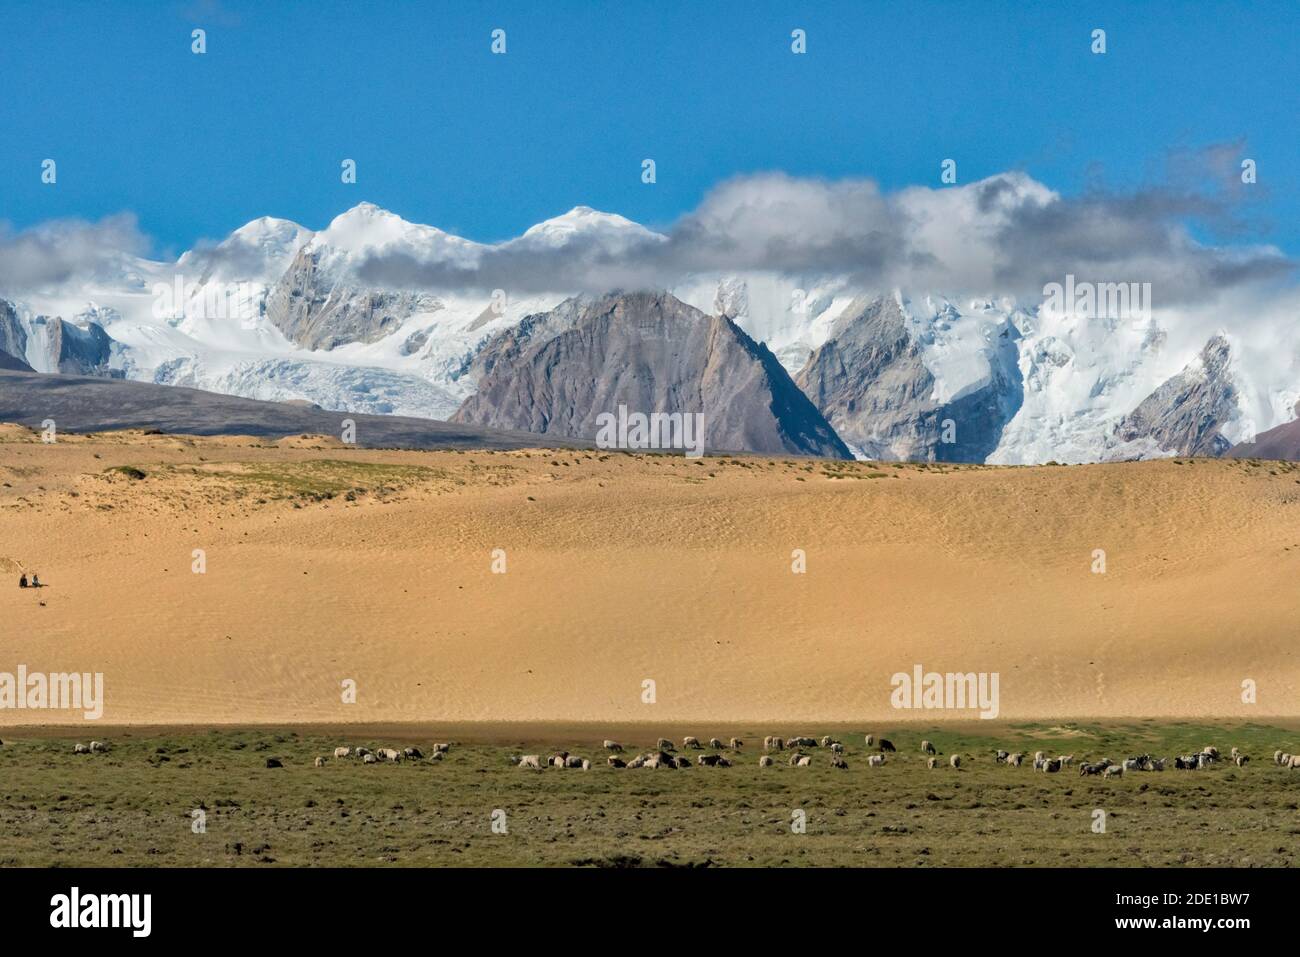 Cime innevate dell'Himalaya, Prefettura di Shigatse, Tibet, Cina Foto Stock